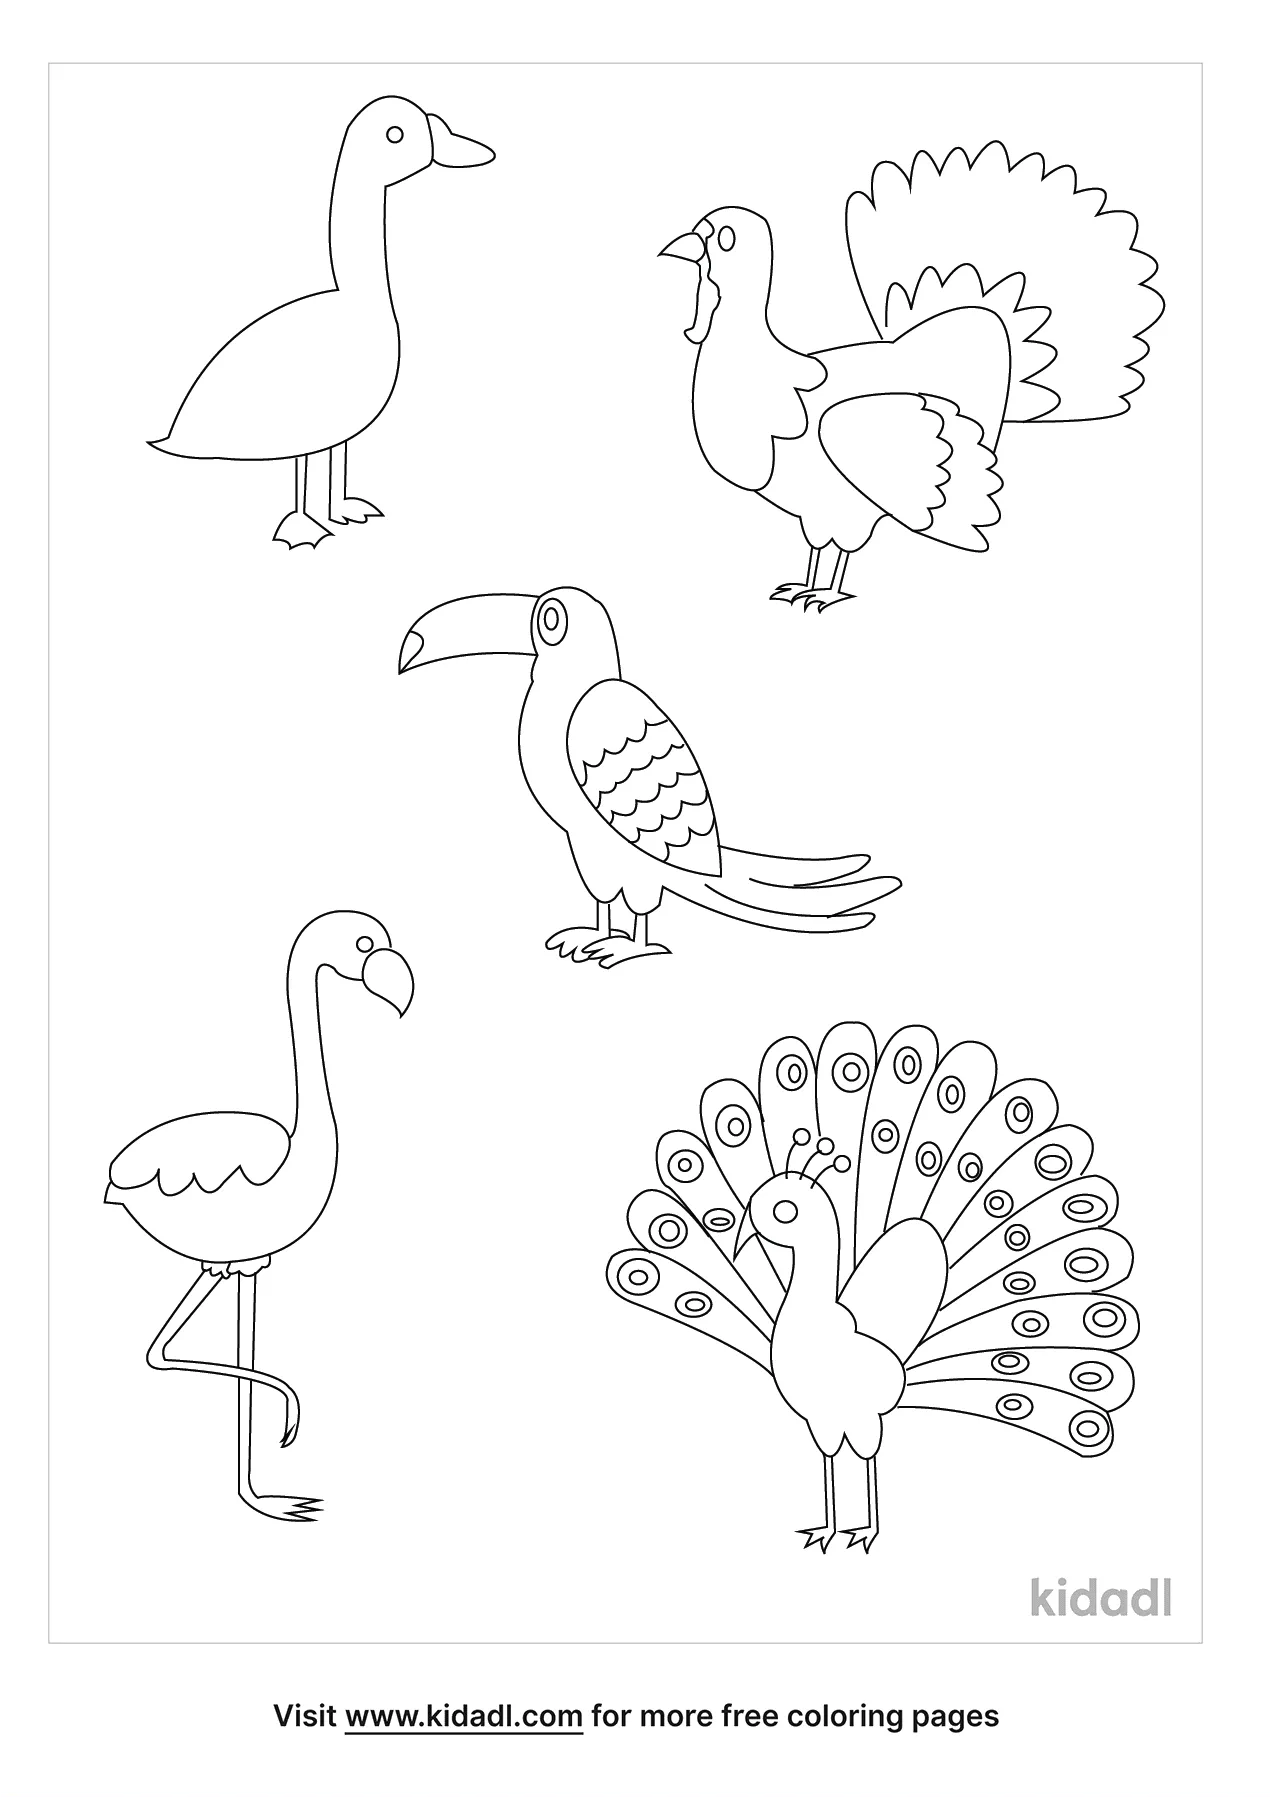 Types Of Birds   Kidadl